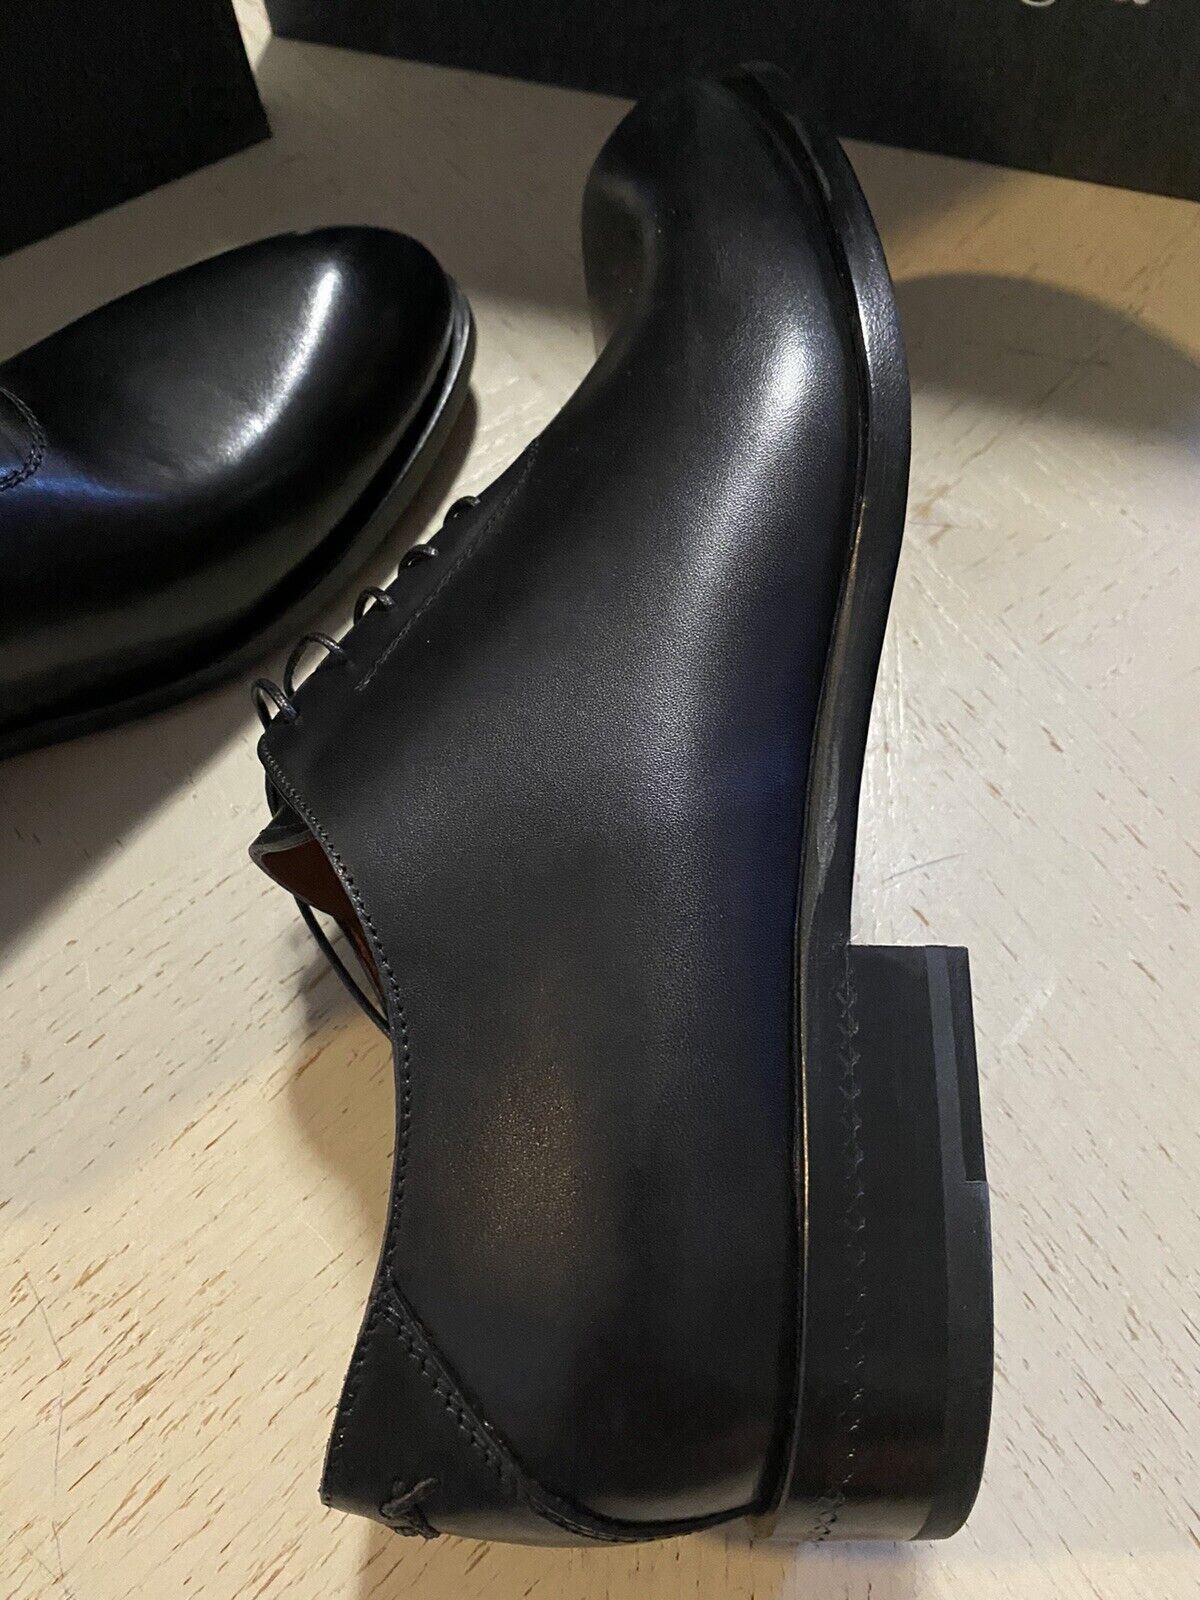 New $950 Ermenegildo Zegna Couture Oxford Leather Shoes Black 10 US Italy